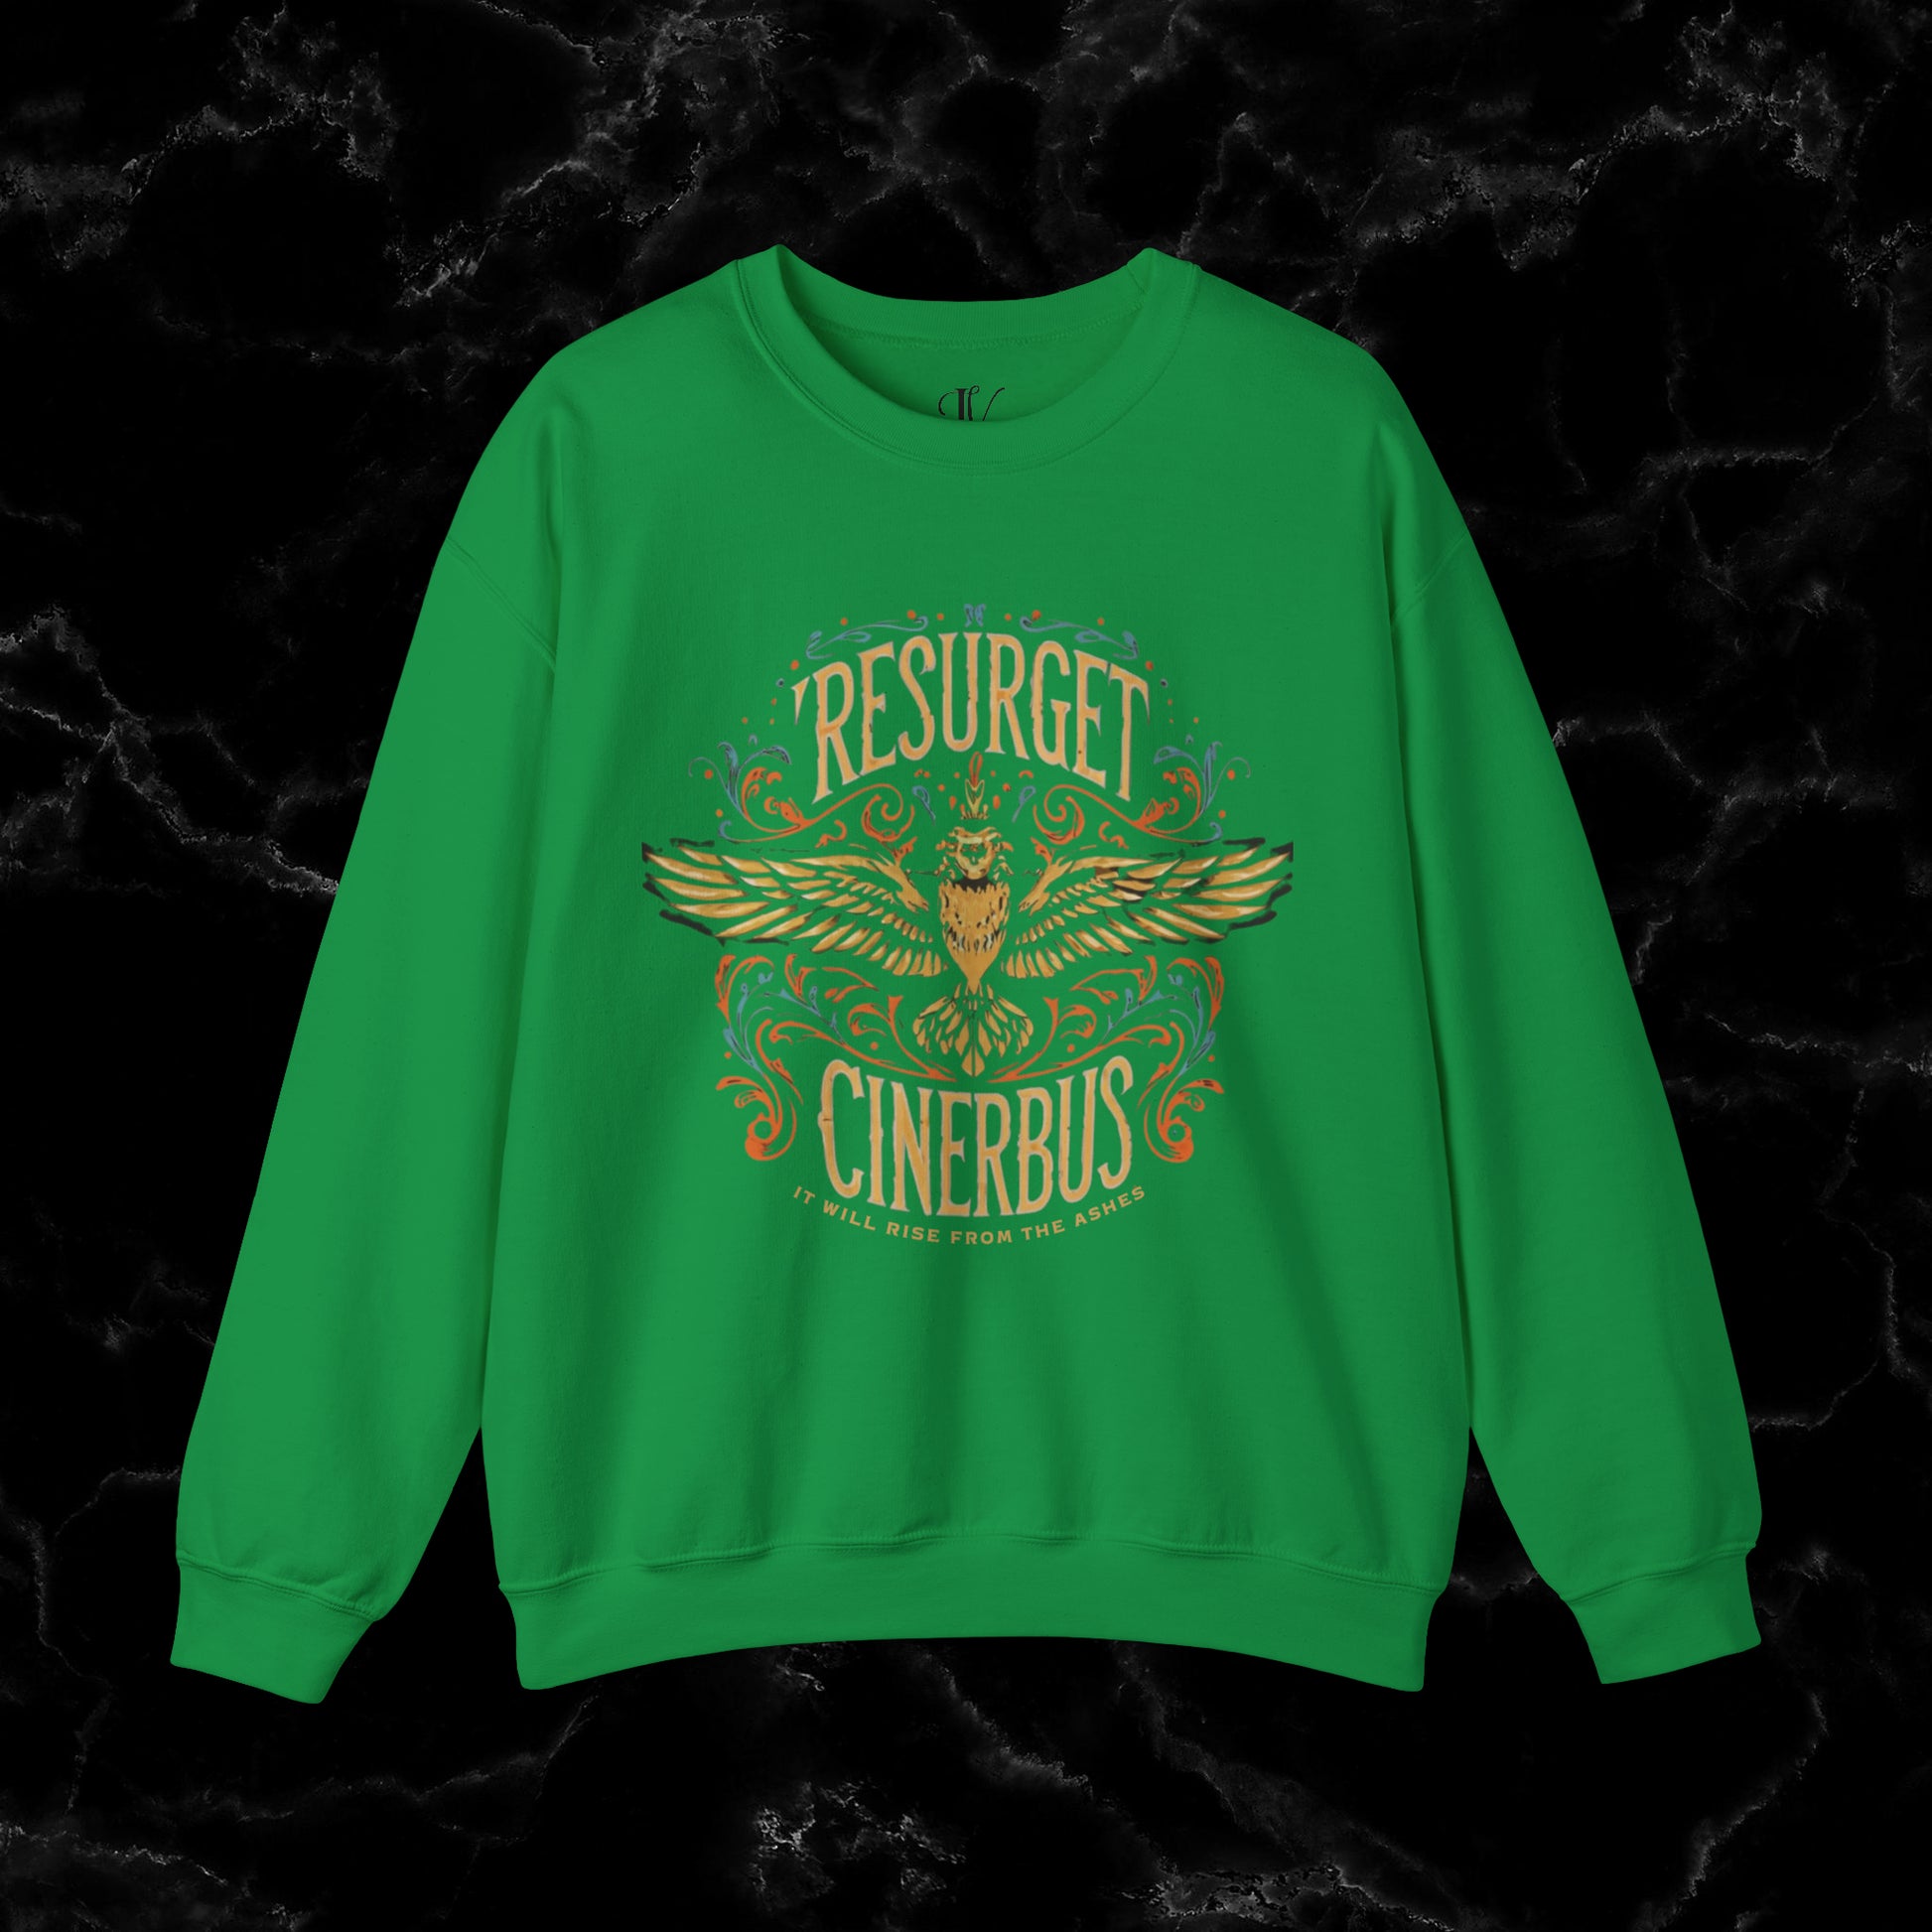 Resurget Cineribus Unisex Crewneck Sweatshirt - Latin Inspirational Gifts for Sports Football Fans Sweatshirt S Irish Green 